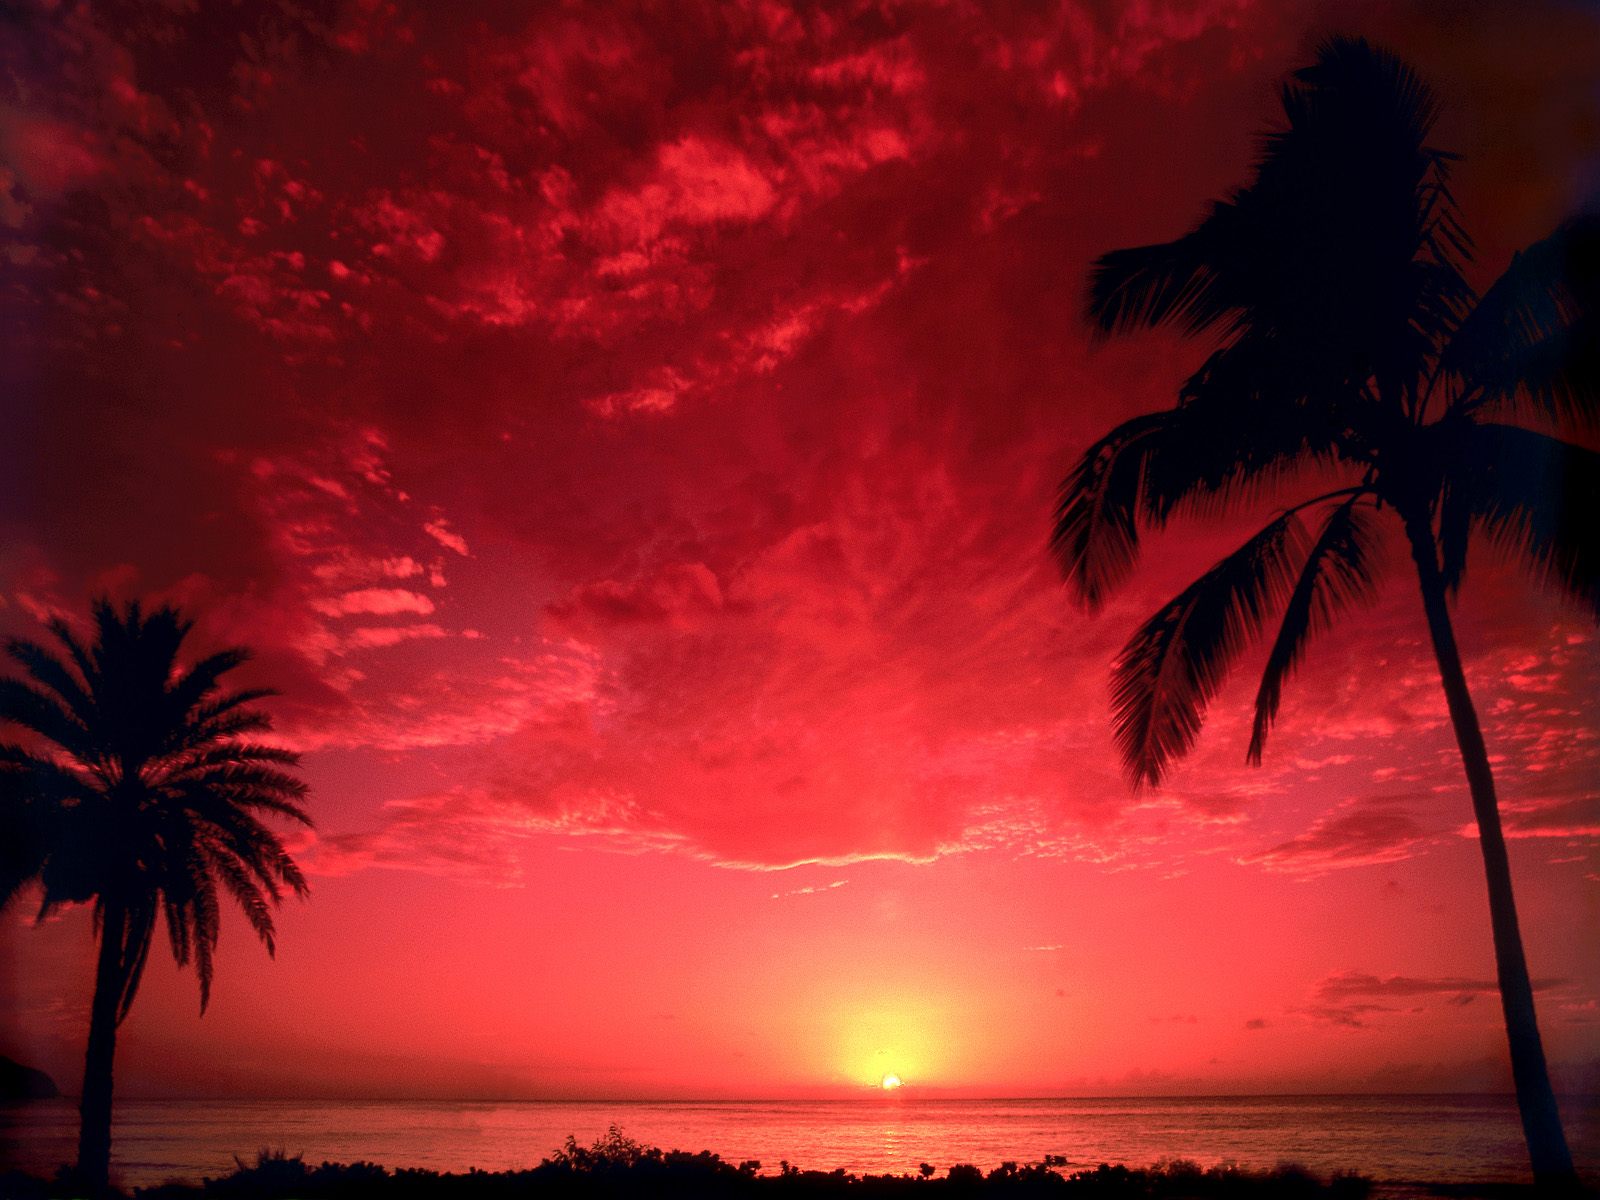 https://blogger.googleusercontent.com/img/b/R29vZ2xl/AVvXsEh6vKQAual8ZXBi5PNJstnrFj1uRBgDCgBMAyxY2V402x7kO9BX5DqJ2iGEPk2BZKBhfHLe1RmkmlNGwoekR4nE9EqDCTL9AqIp04YjyXz8VseJ1Jz3w3Kgo5BCAkrZJgKFCvozduSn4jk/s1600/South+Pacific+Sunset+HD+Wallpapers.jpg